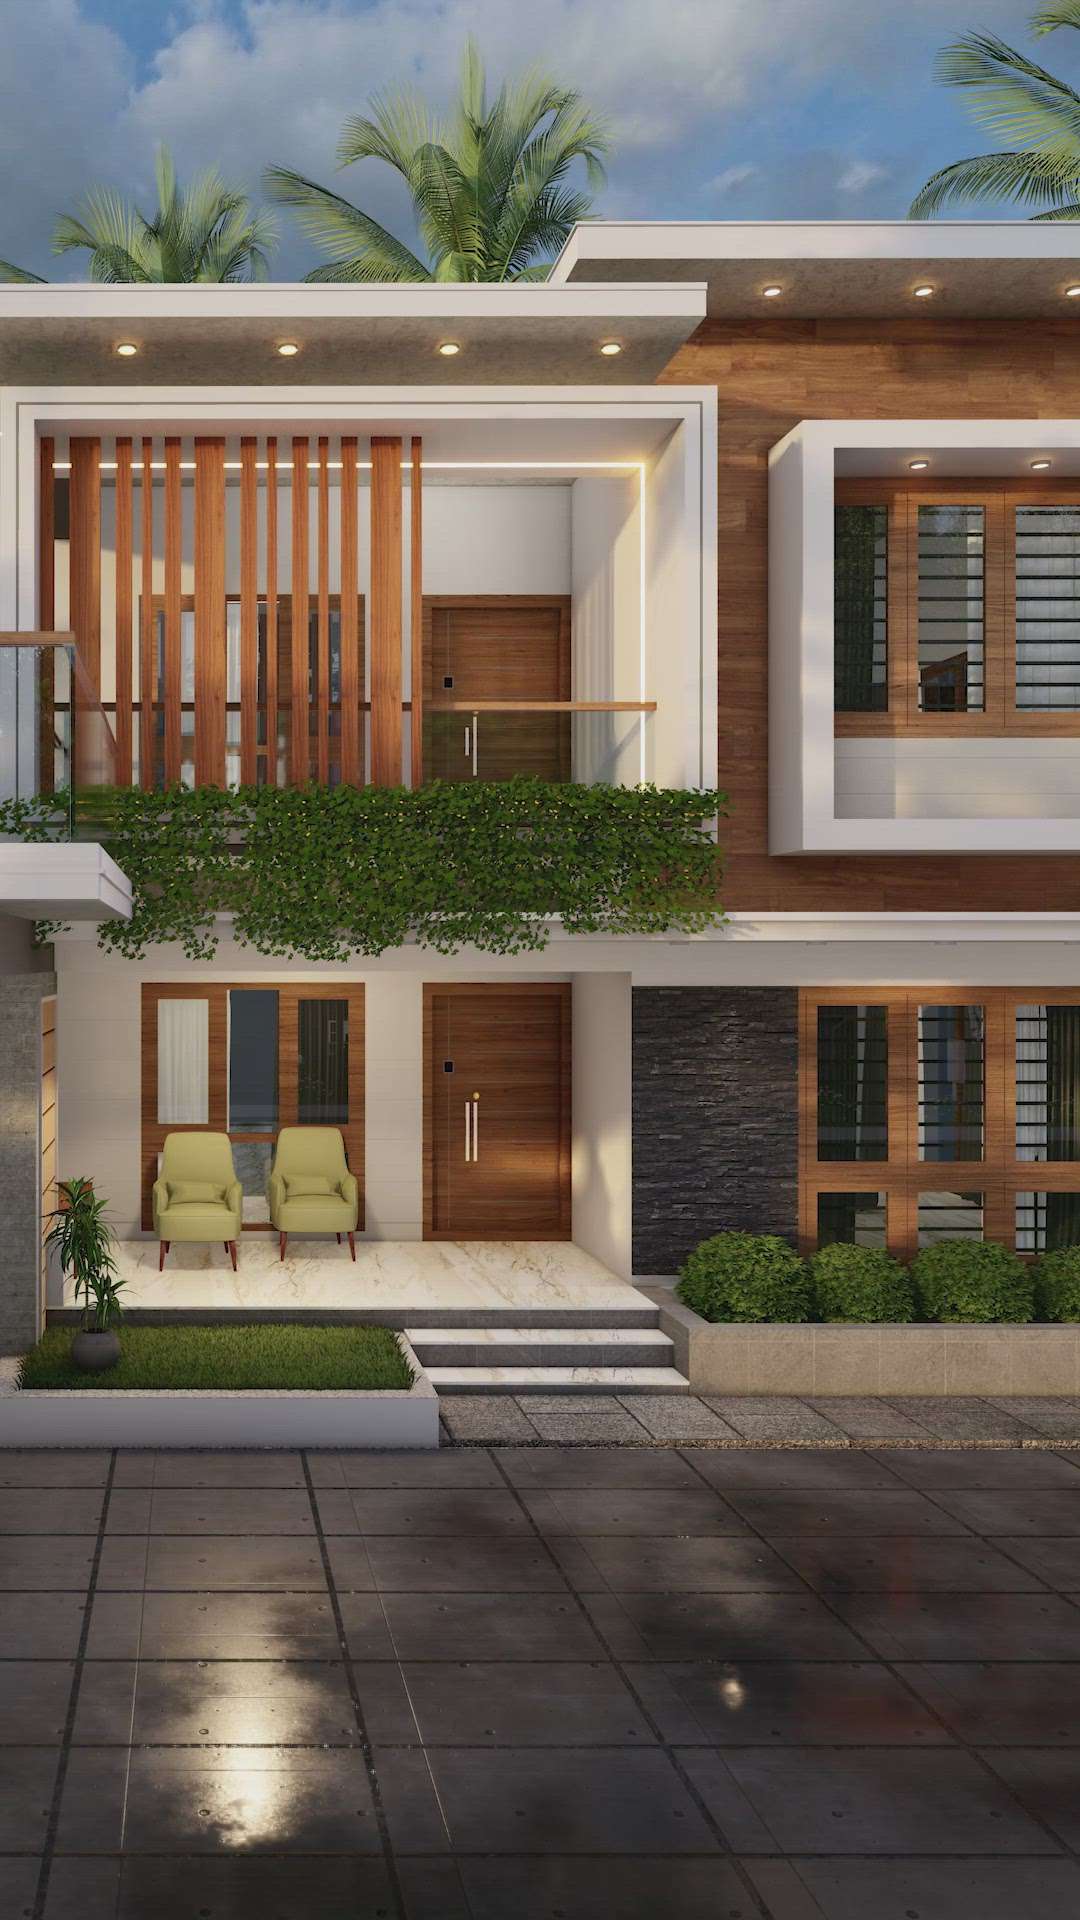 4bhk home exterior
#homesweethome  #KeralaStyleHouse #architectjanissony  #creatorsofkolo  #modernhouses  #ContemporaryHouse  #exteriors  #architectjanissony